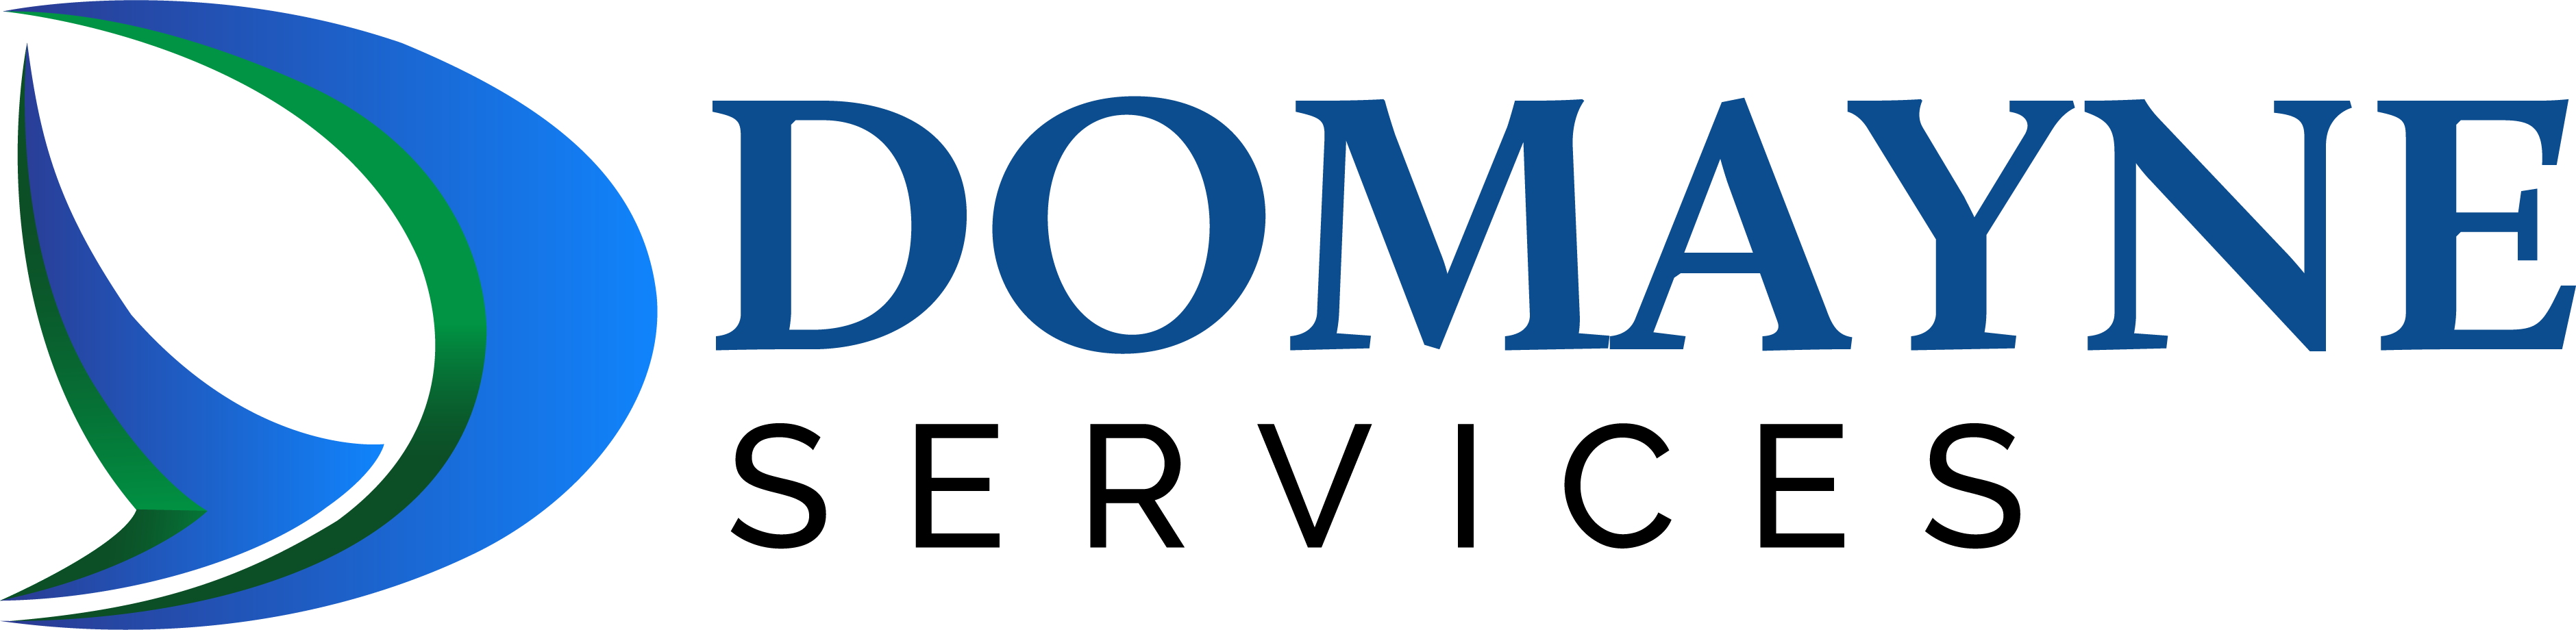 Domayne Services Logo